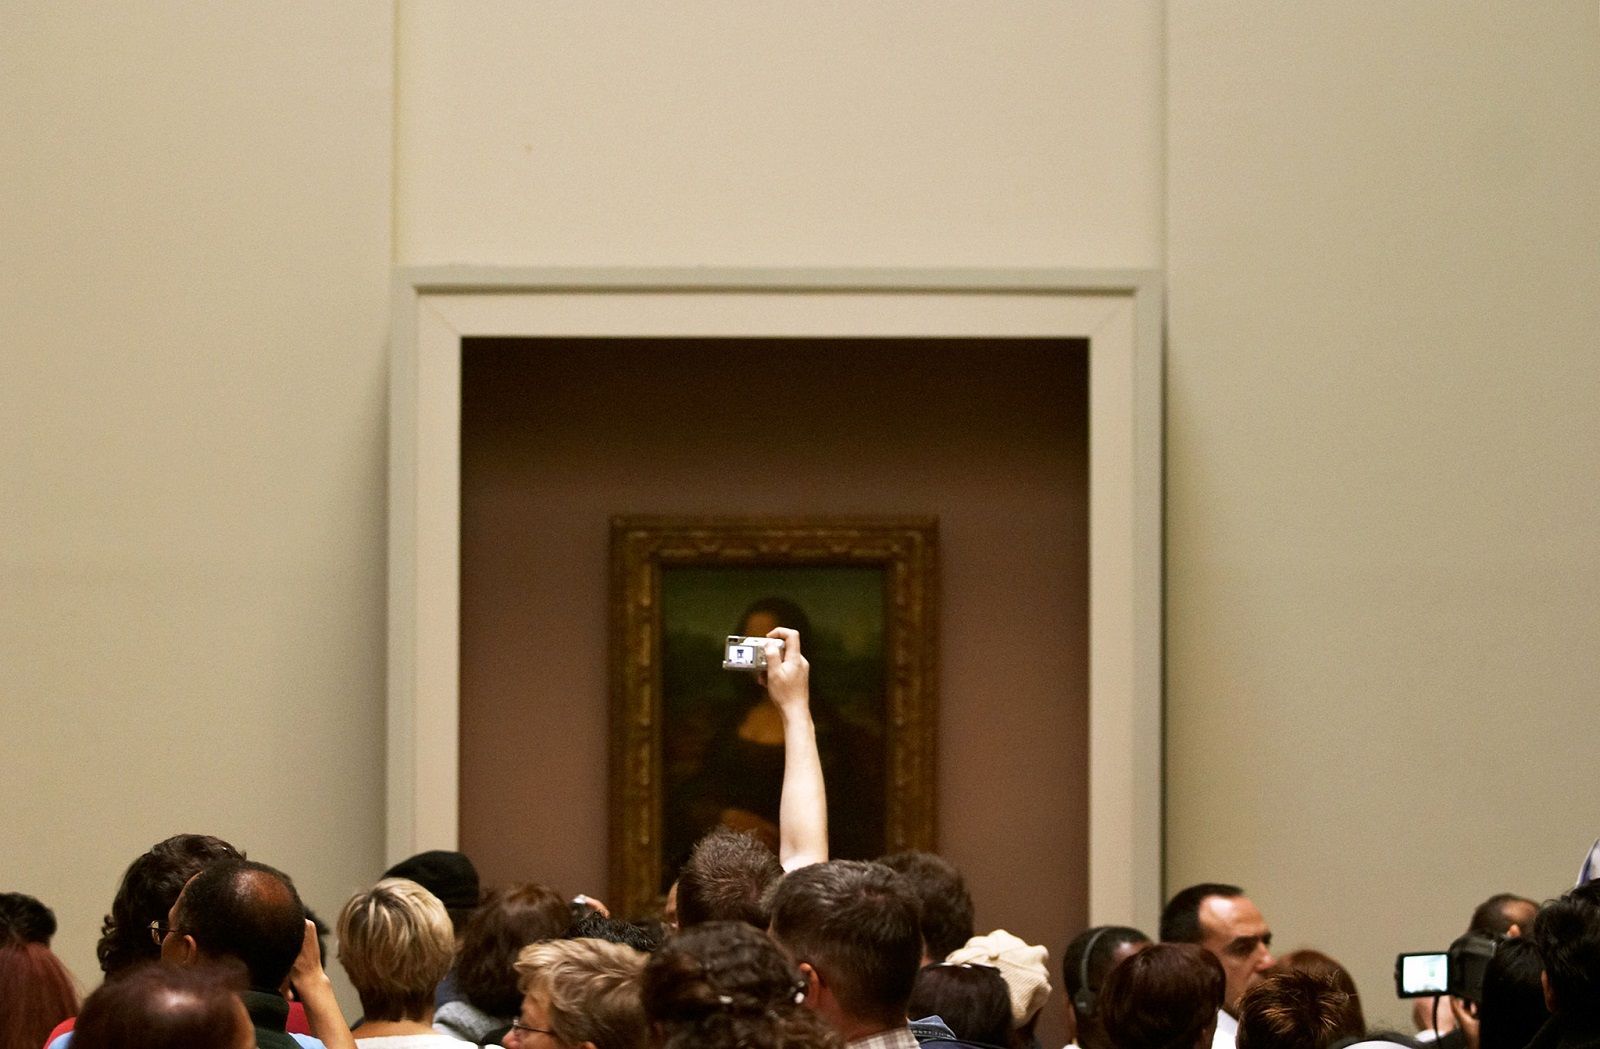 Should we take down the Mona Lisa? Jason Farago, art critc of The New York Times, raises the question